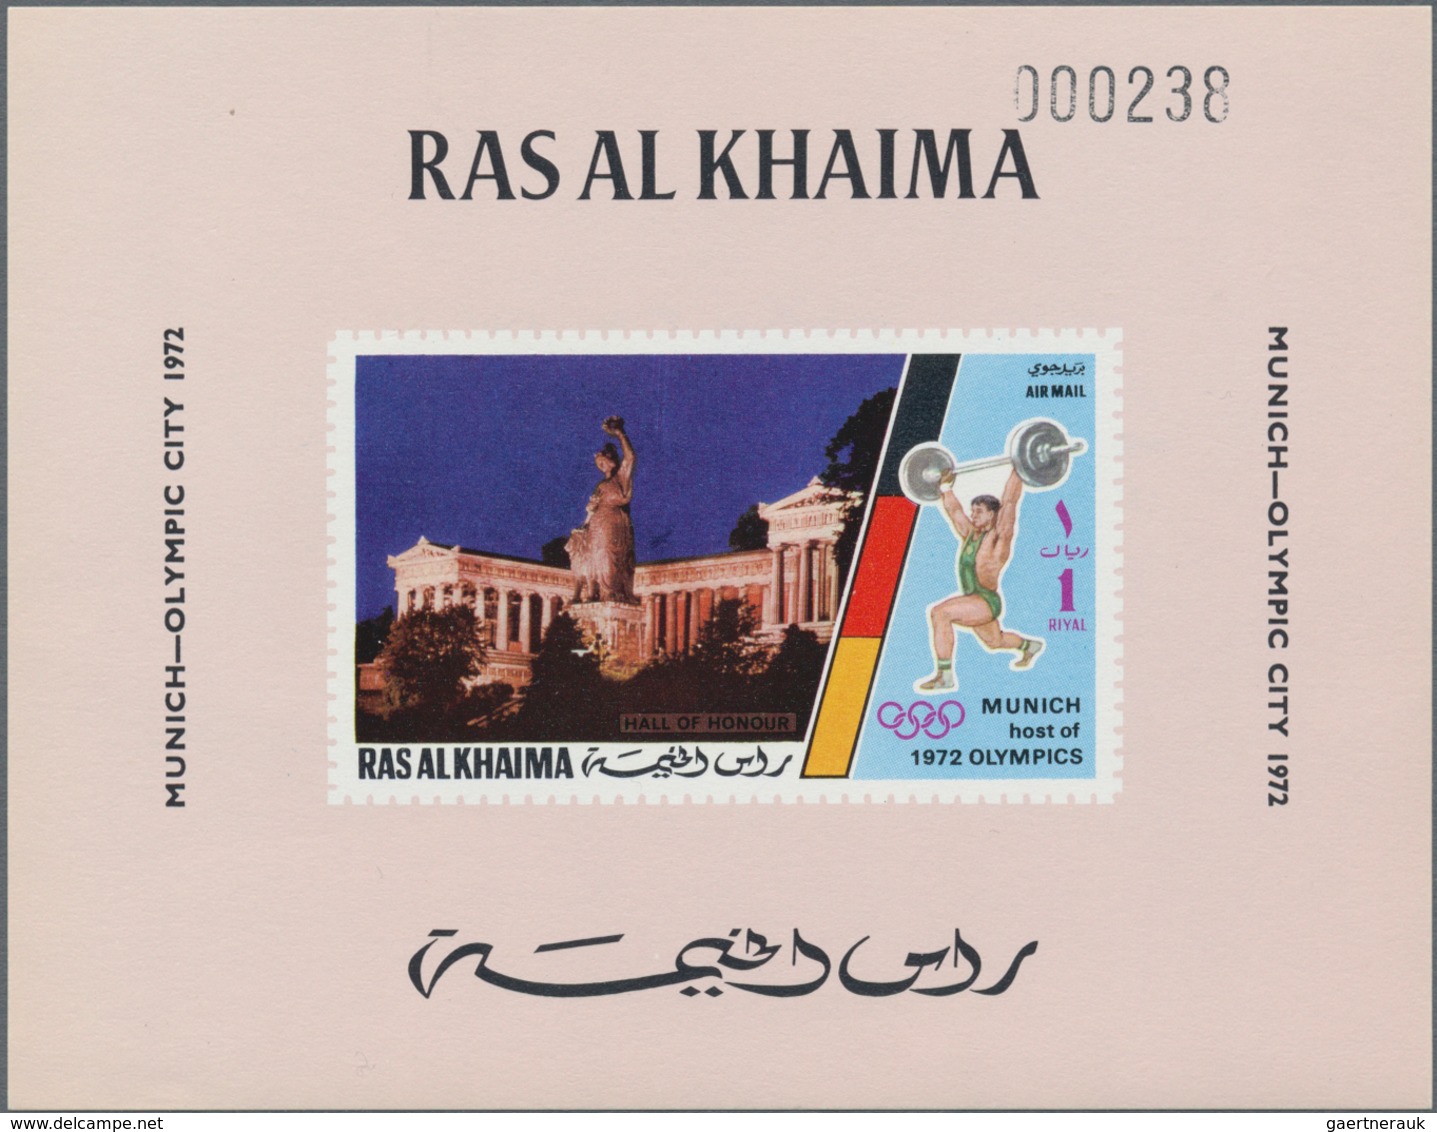 Naher Osten: 1965/1972, comprehensive MNH accumulation in a box, comprising Ras al Khaima, Ajman, Sh